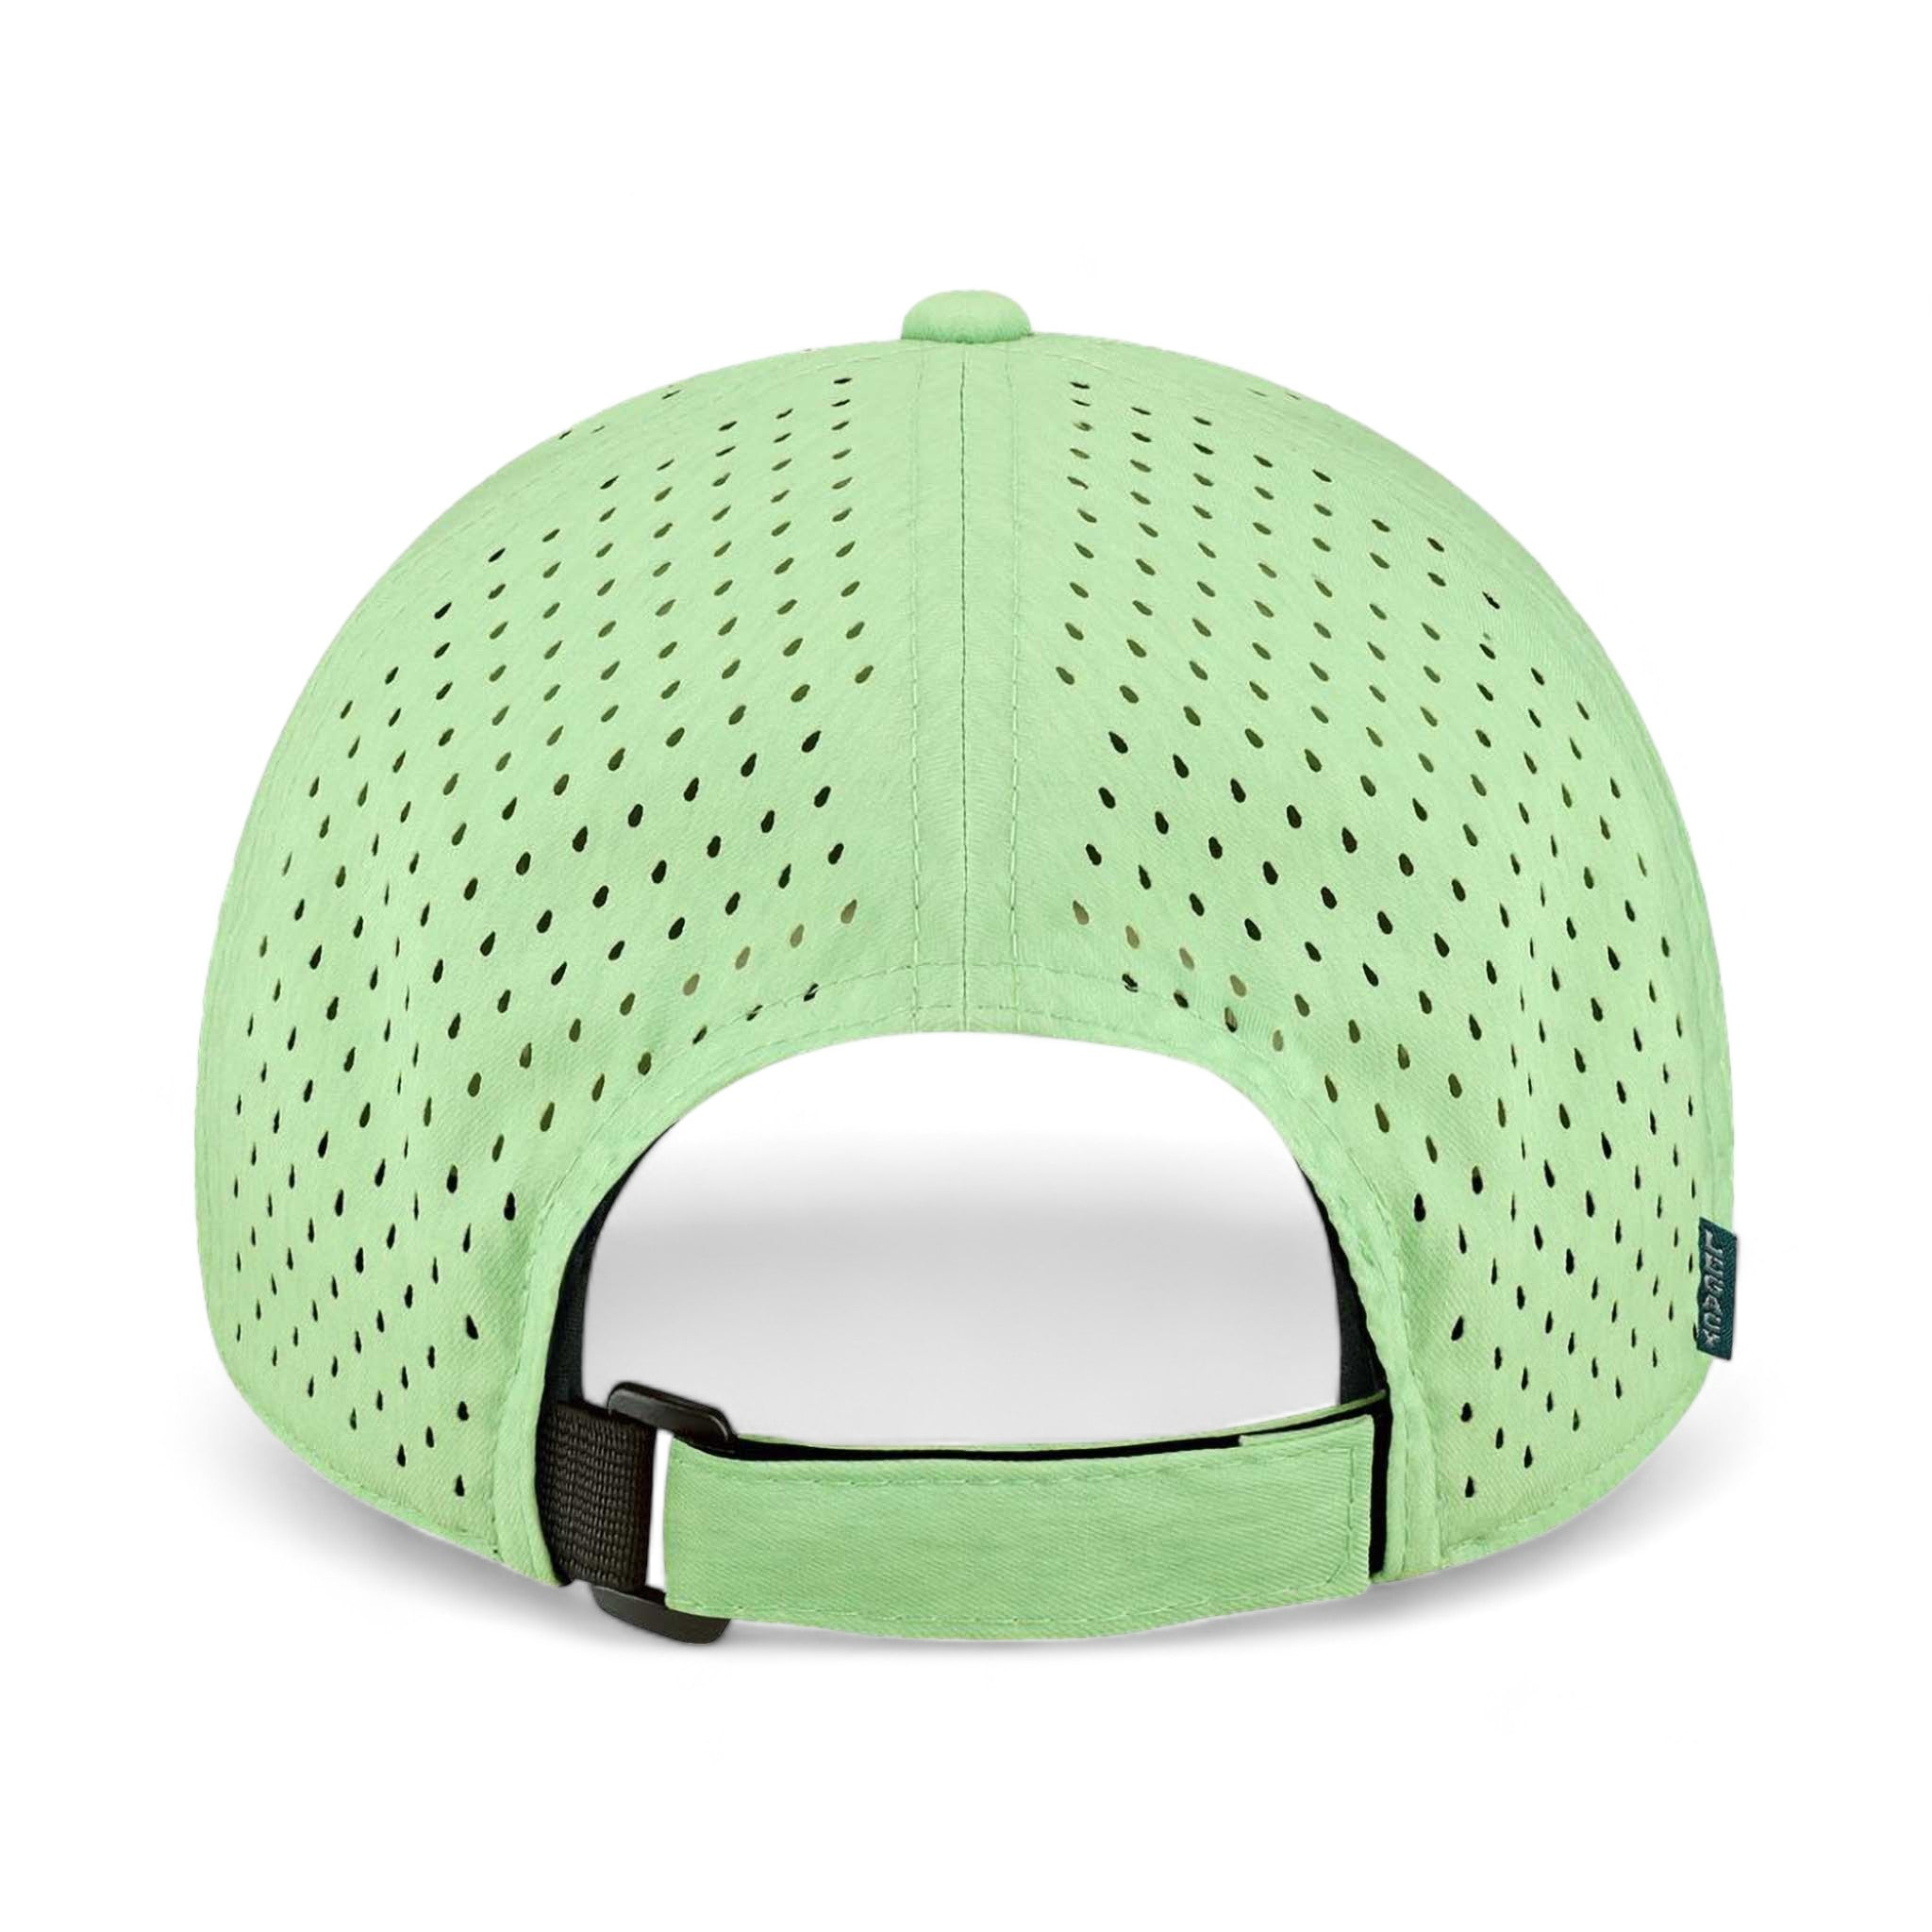 Back view of LEGACY RECS custom hat in eco mint